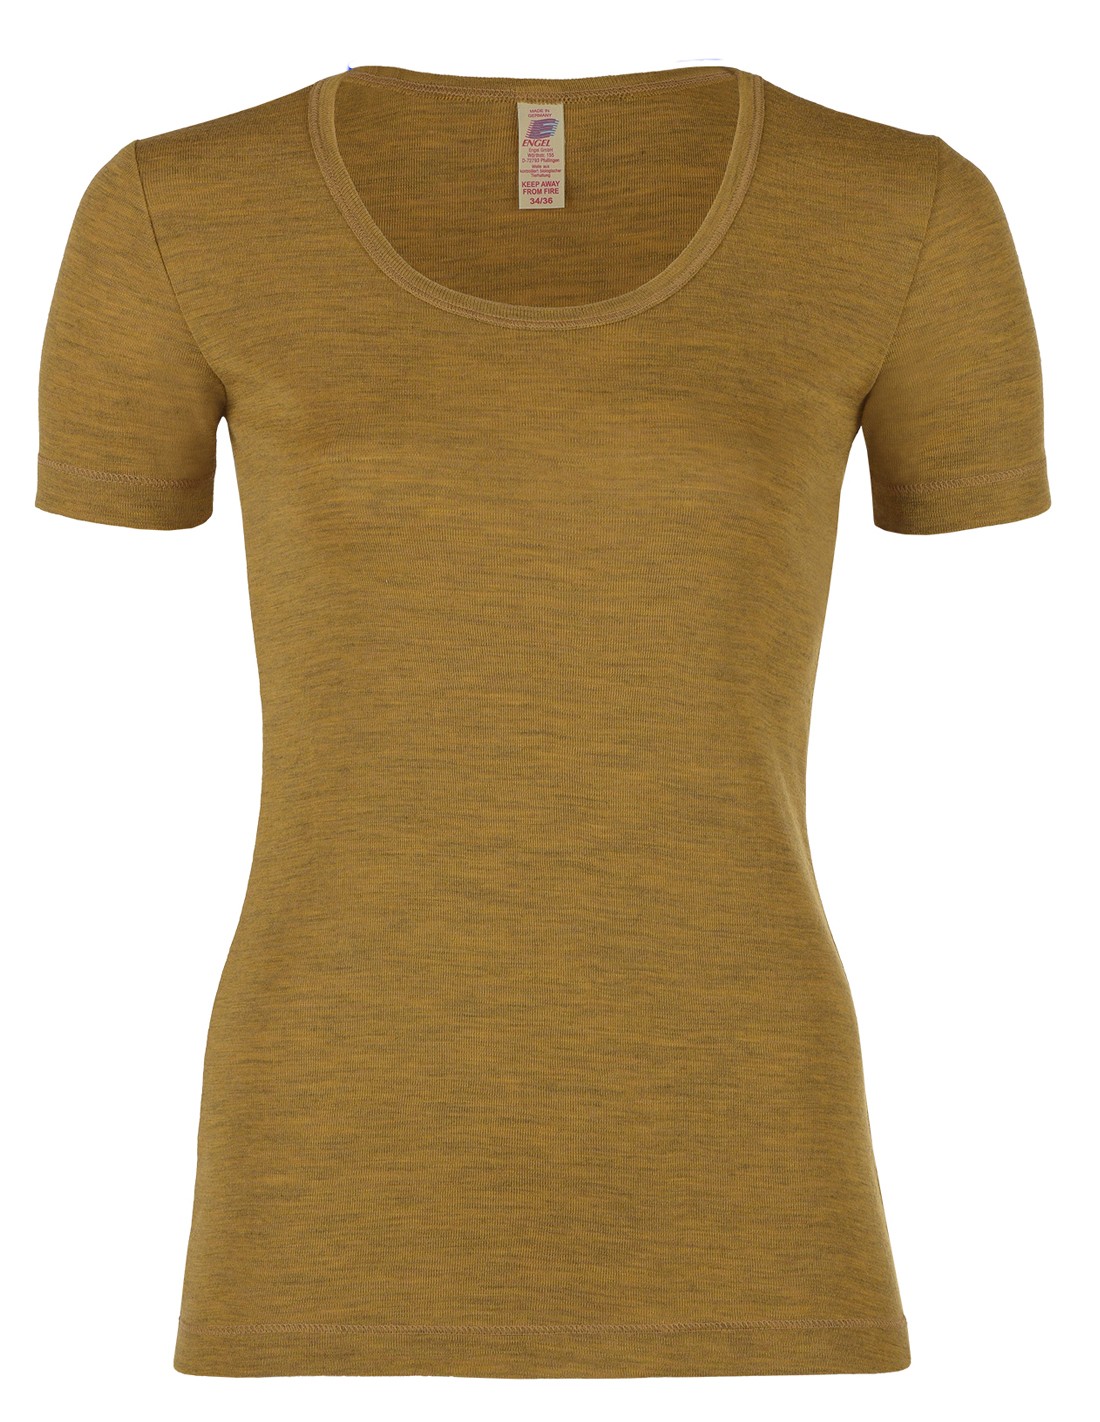 Dames T-Shirt Merino Wol Engel Natur, Kleur Safraan, Maat 34/36 - Small Top Merken Winkel